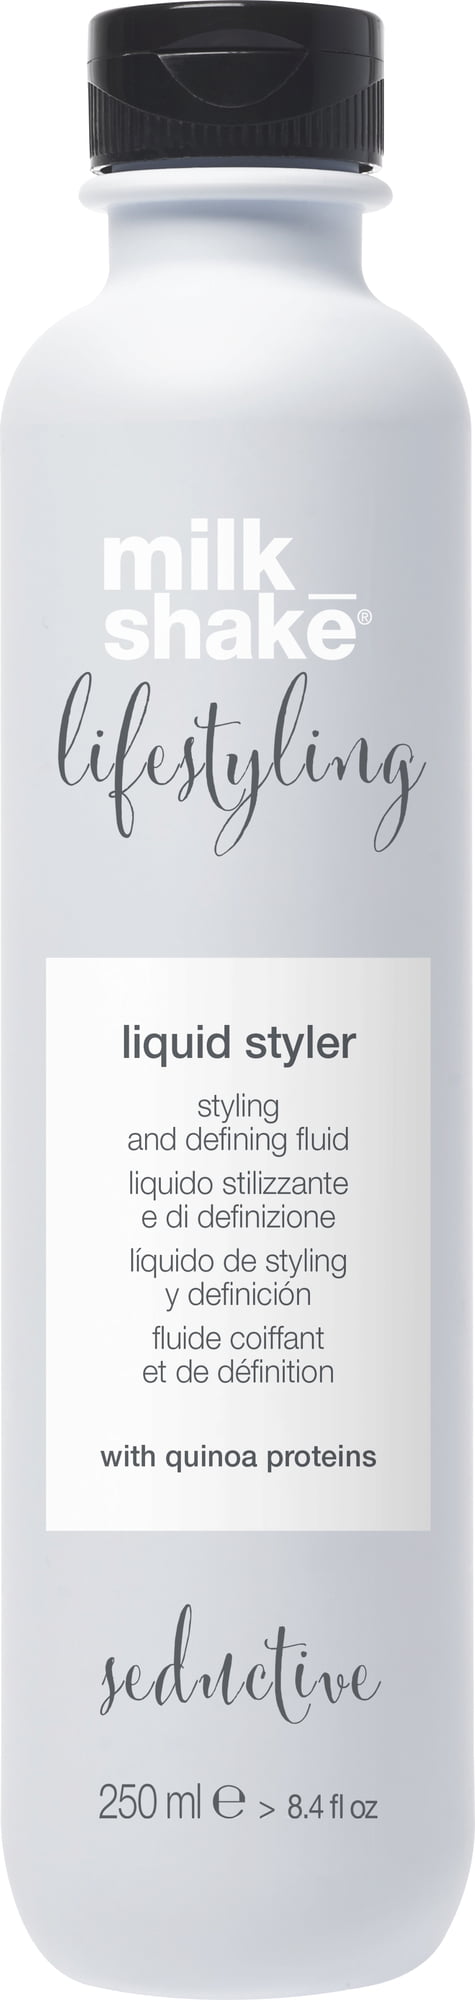 Styler Liquide Lifestyling Séduisante 250 Ml